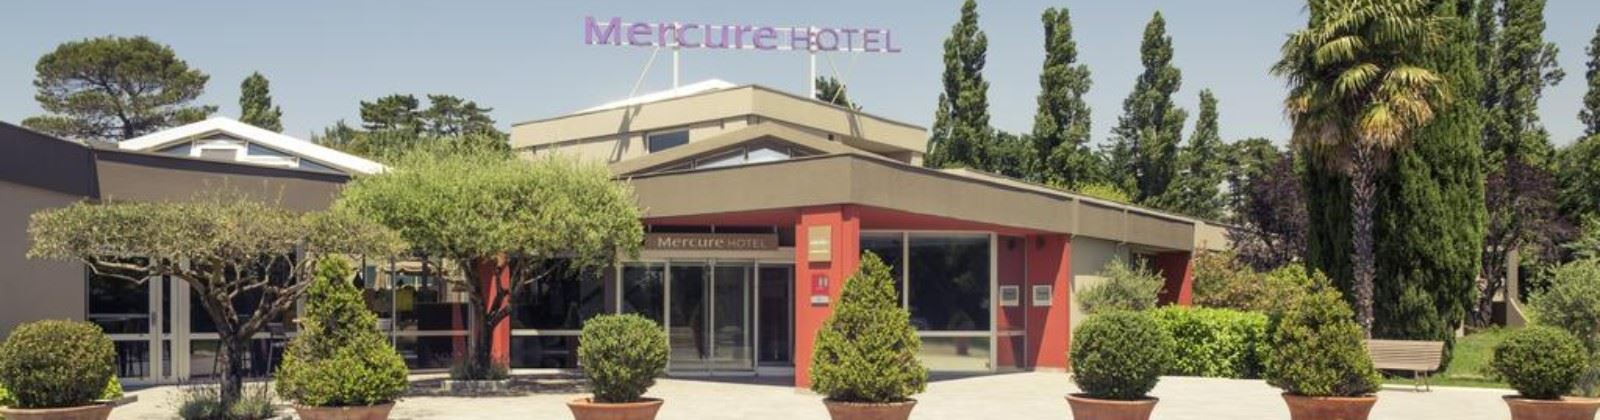 OLEVENE image - mercure-orange-centre-olevene-hotel-restaurant-seminaire-